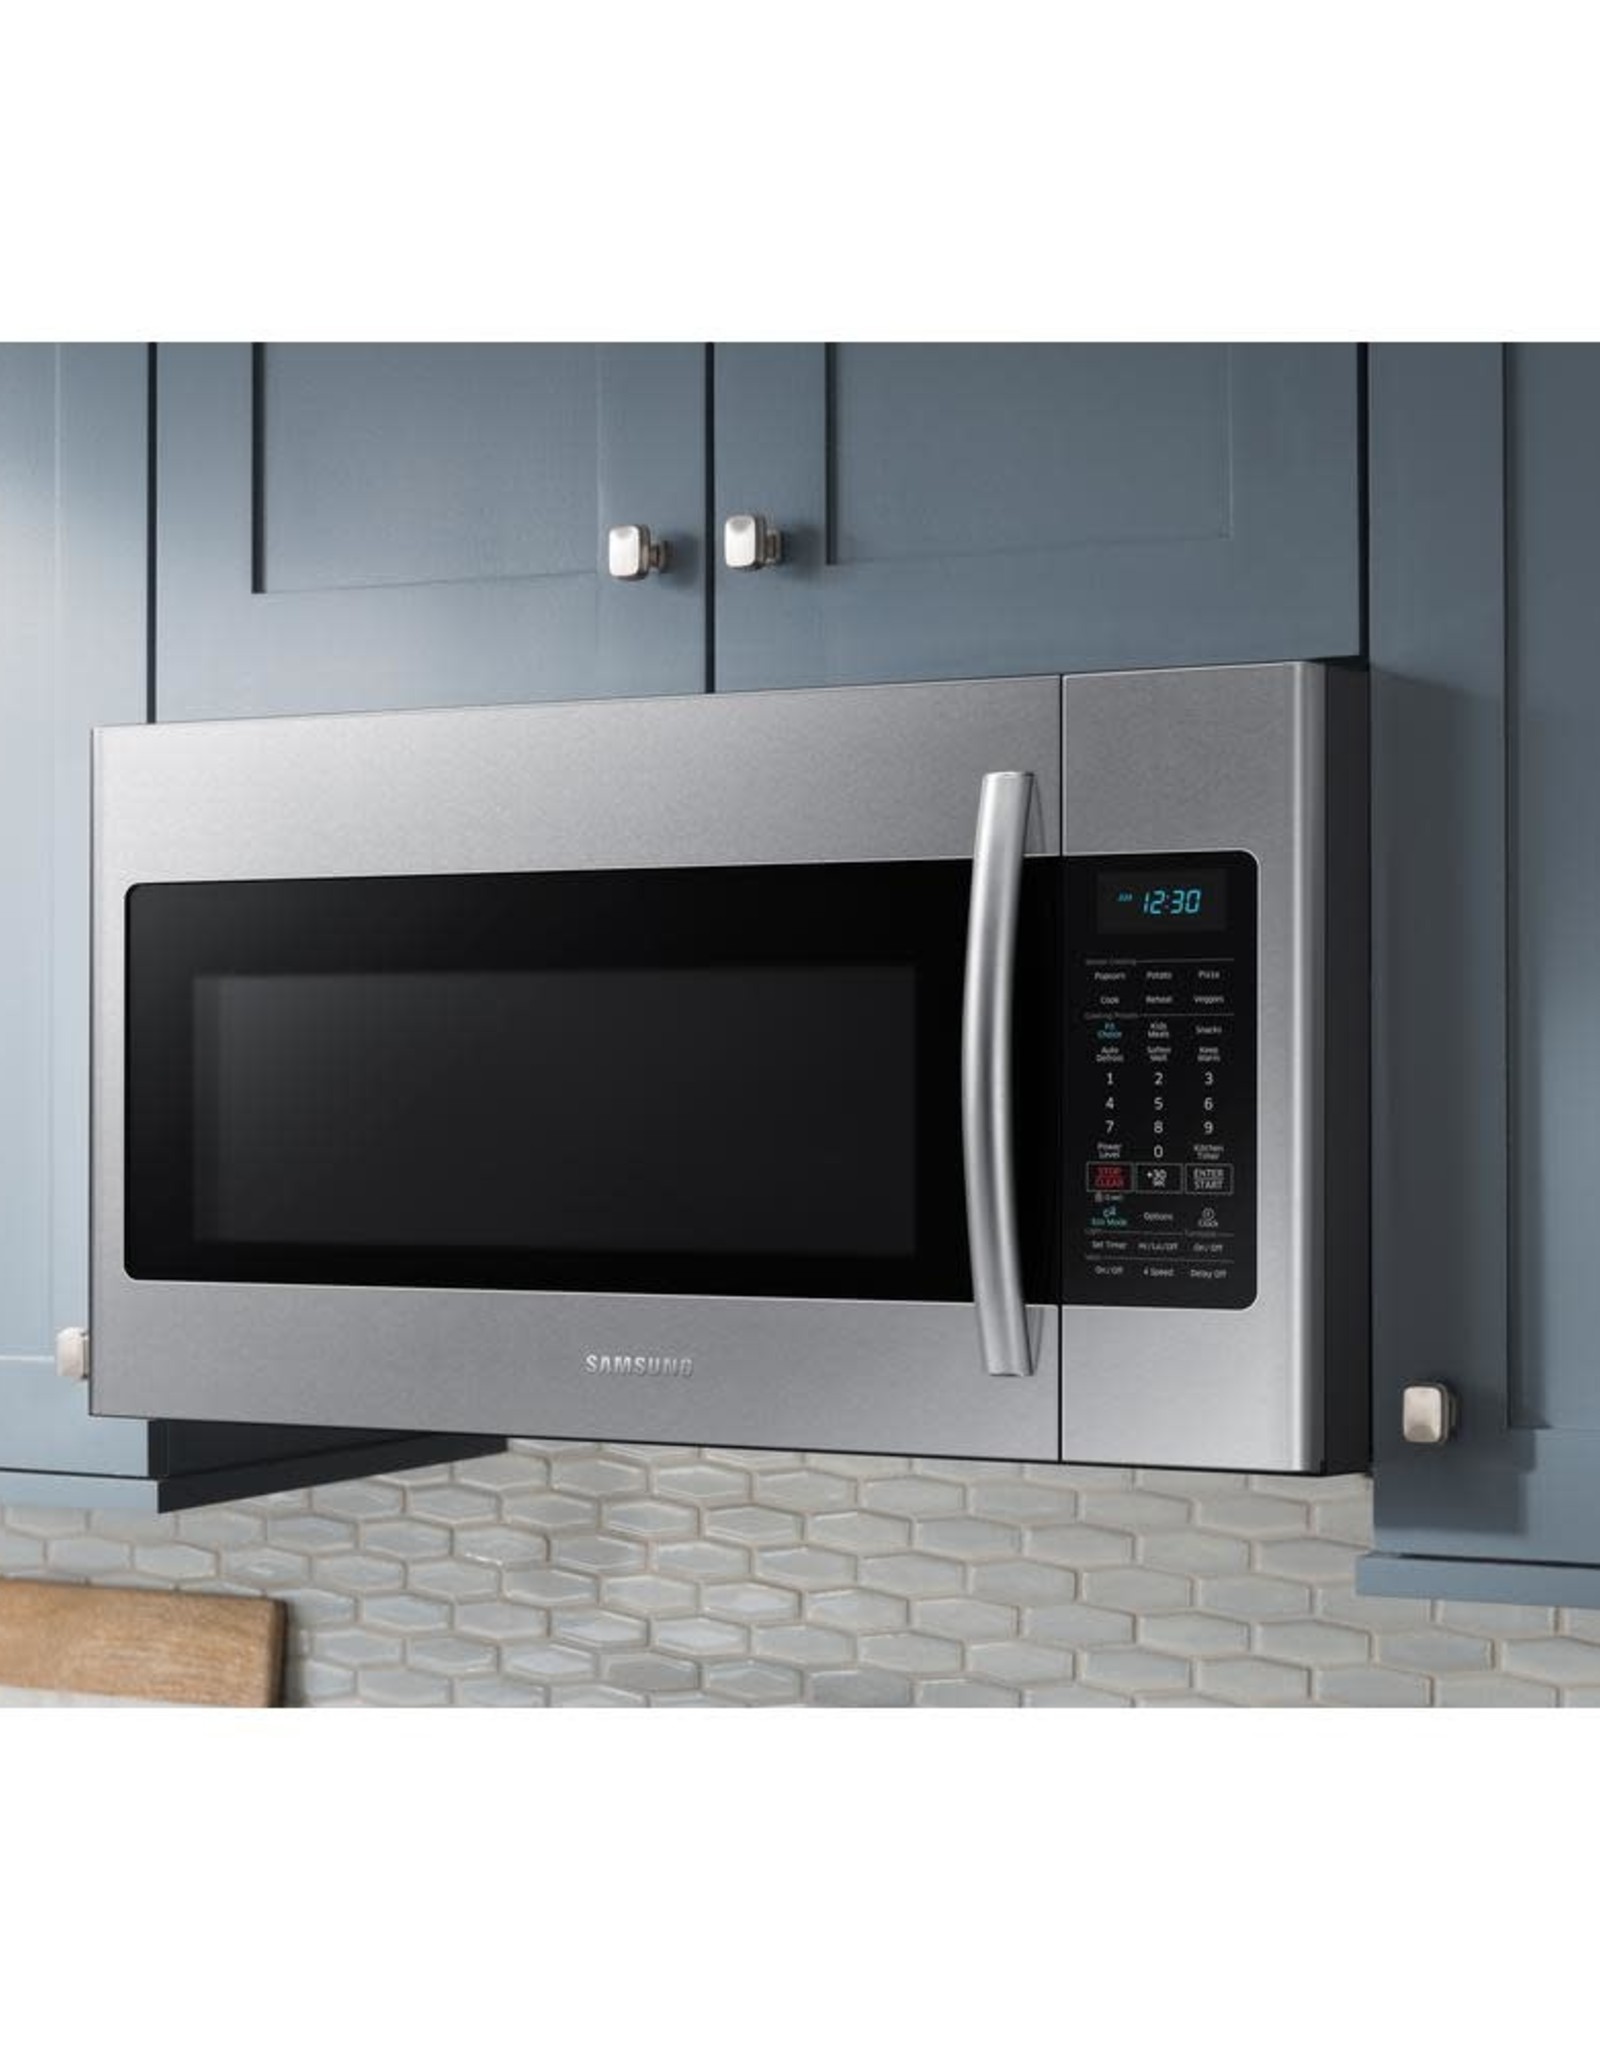 Samsung Samsung 30" 1.8 cu ft over the range microwave